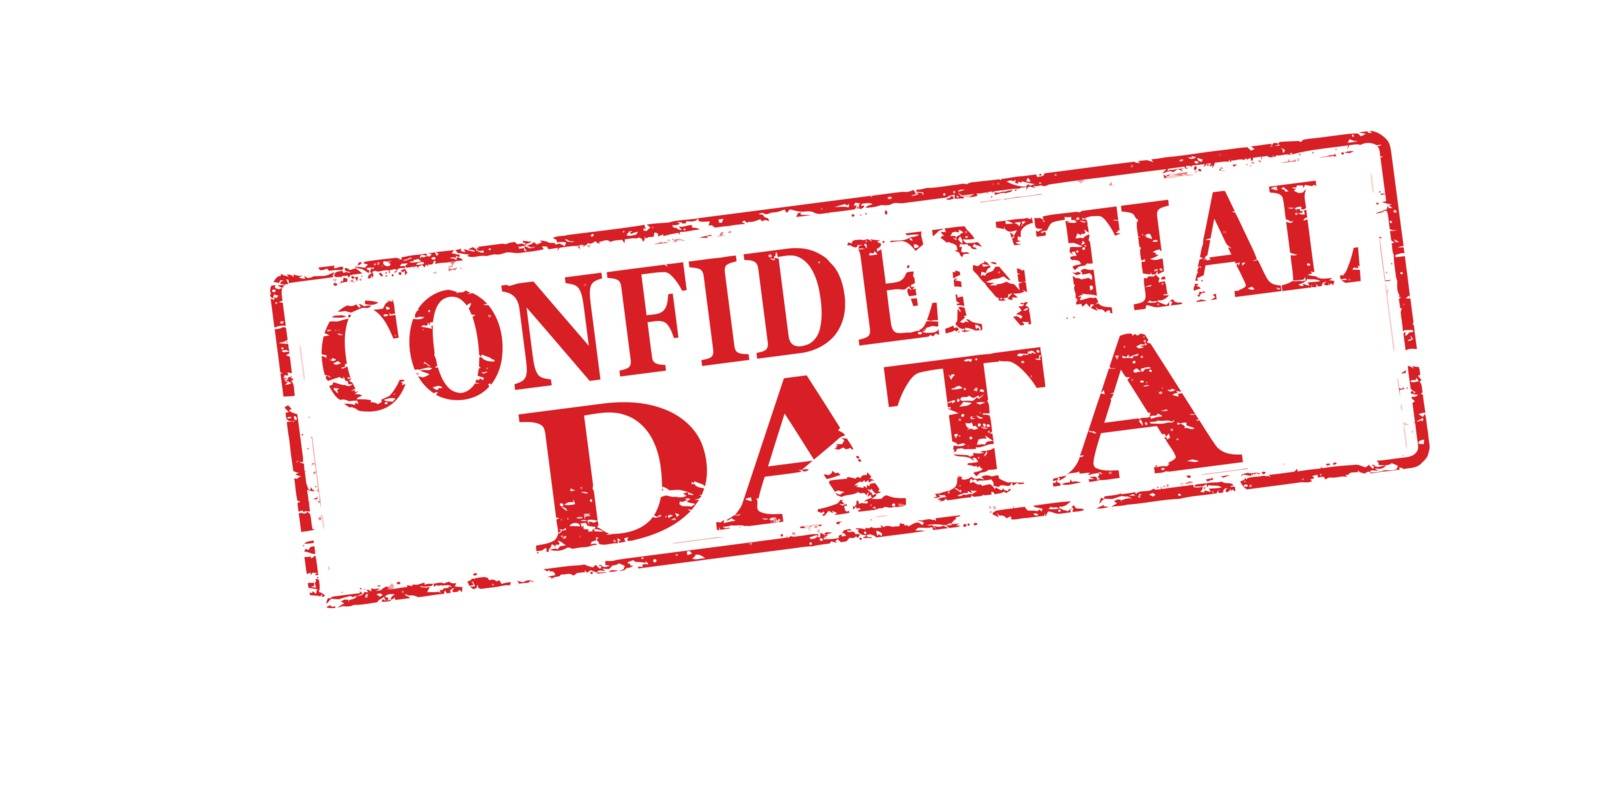 Confidential data by carmenbobo